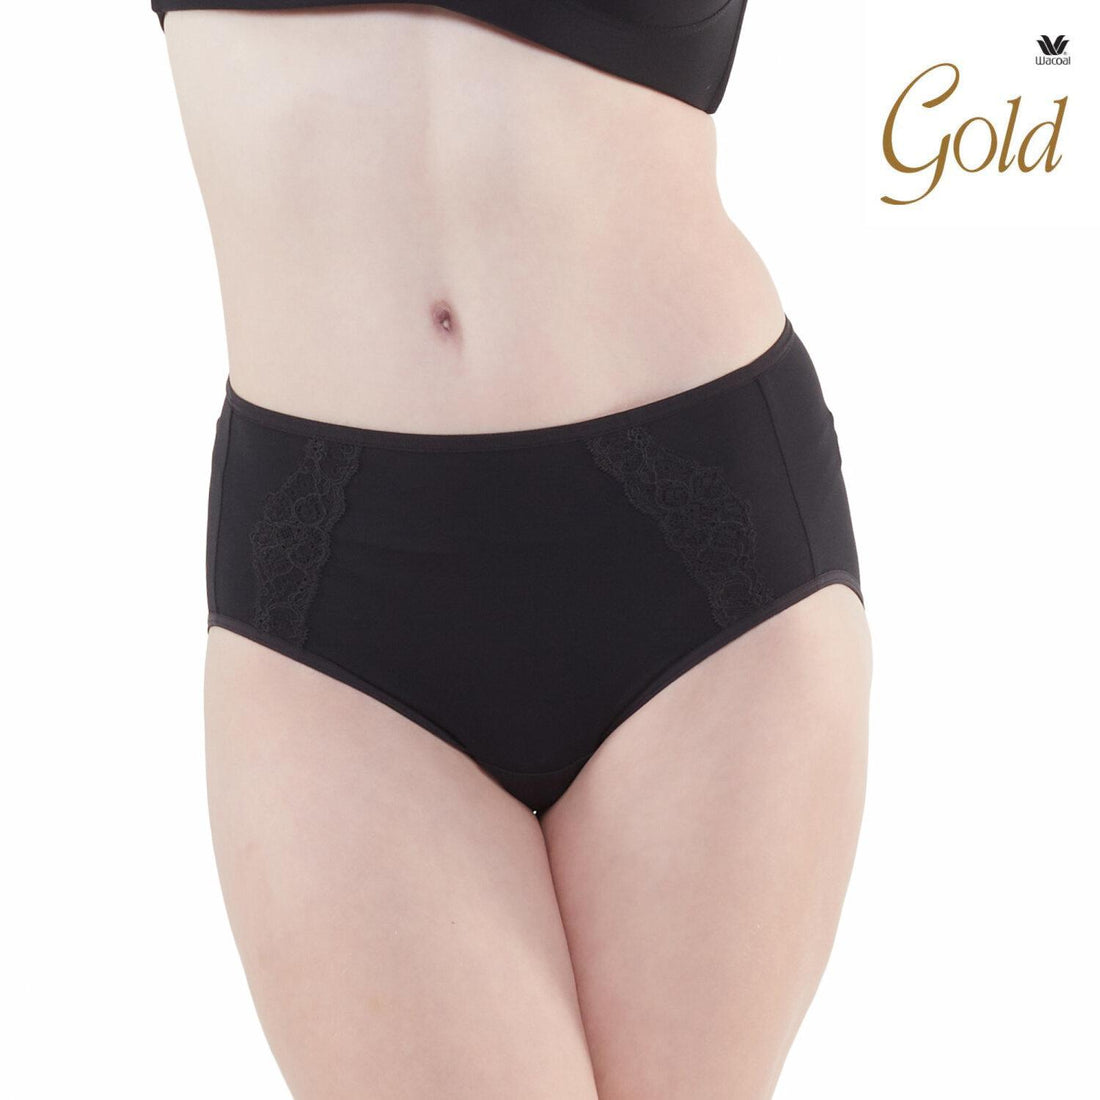 Wacoal Gold Panty กางเกงใน รุ่น W6O541 สีดำ (BL)